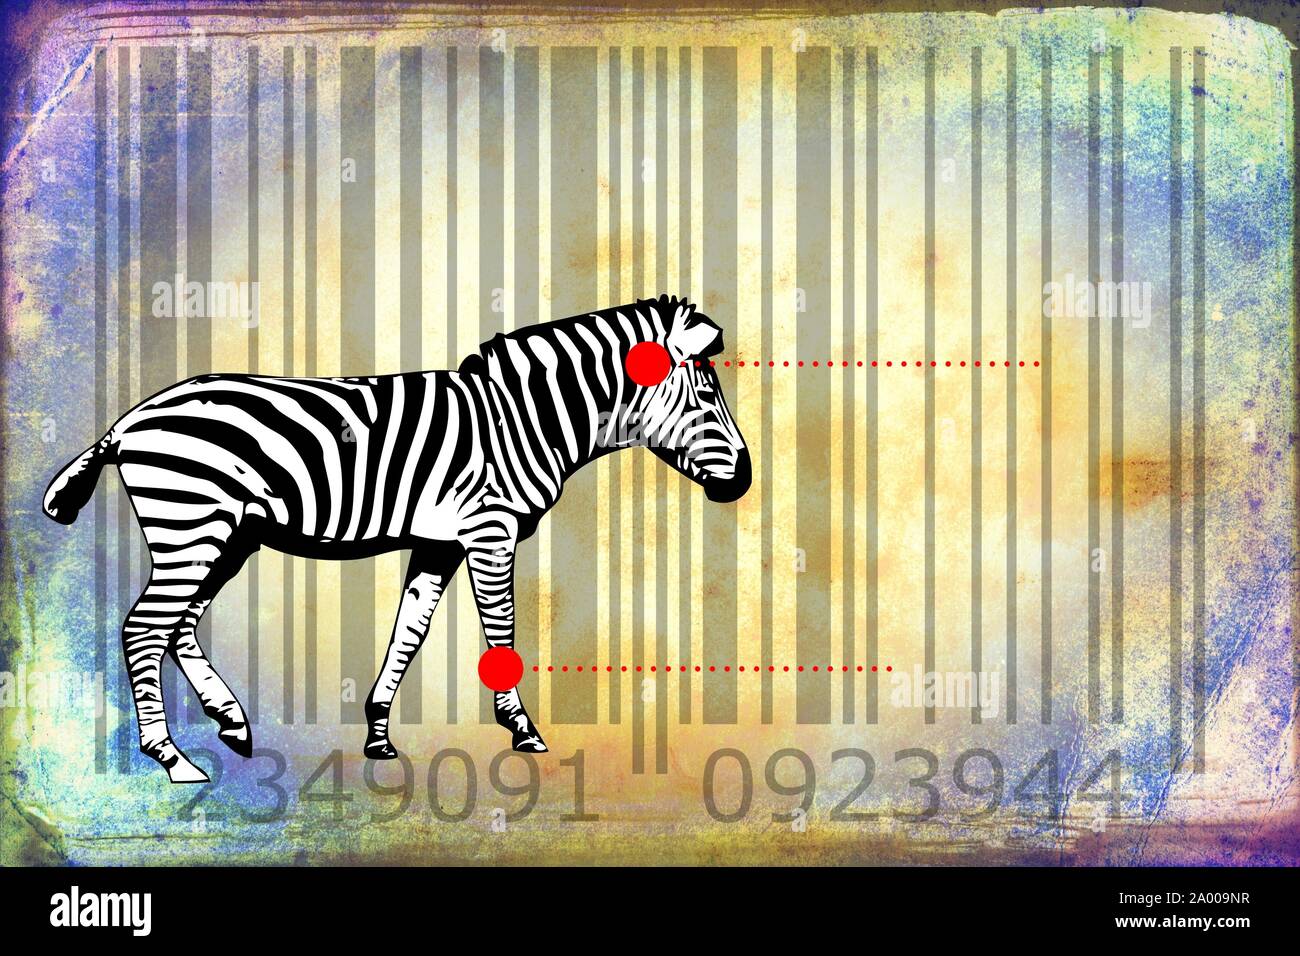 barcode design art idea Stock Photo